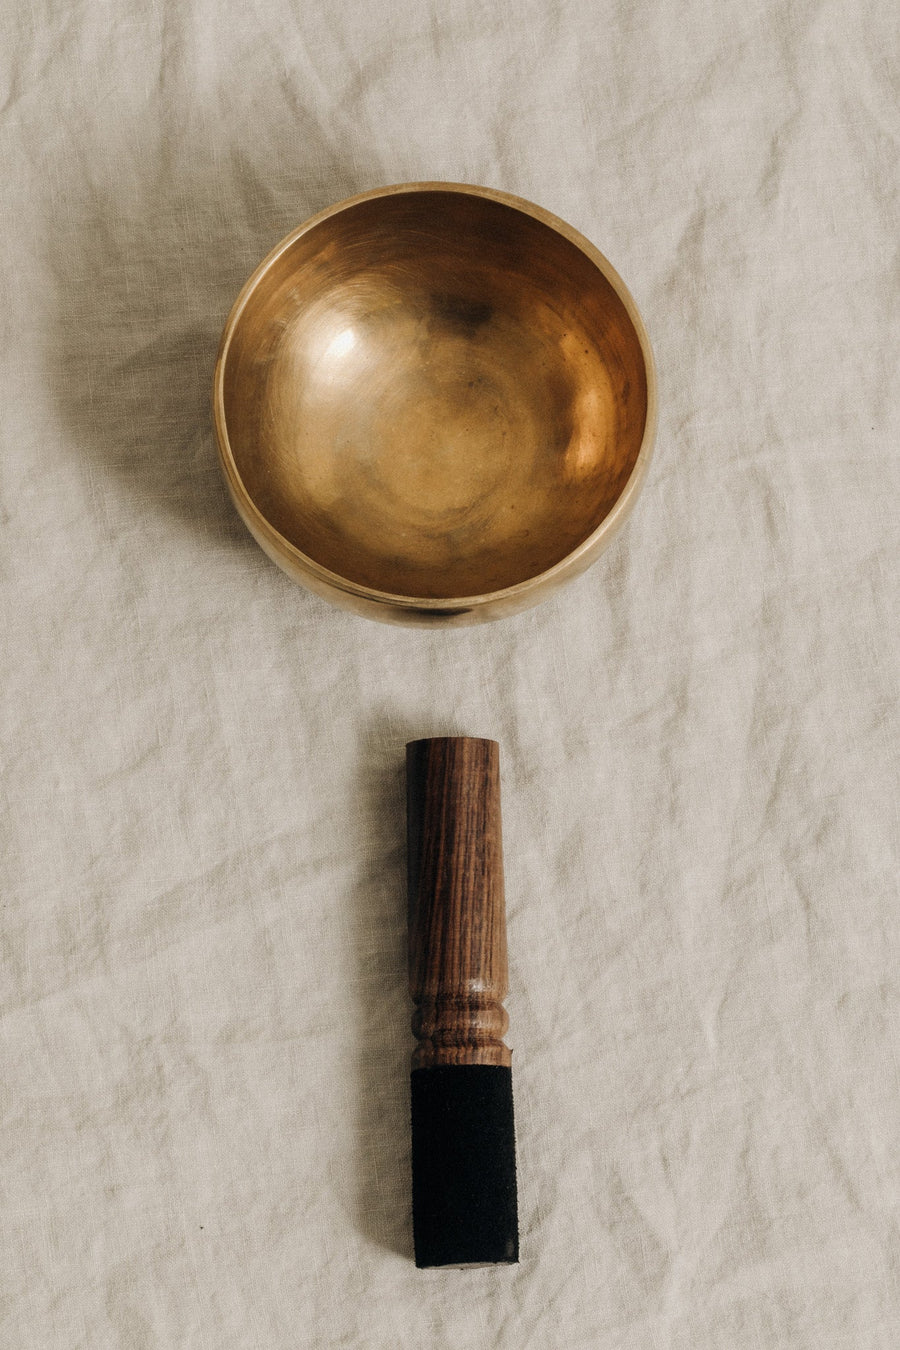 Serenity Tibet Objects Tibetan Singing Bowl